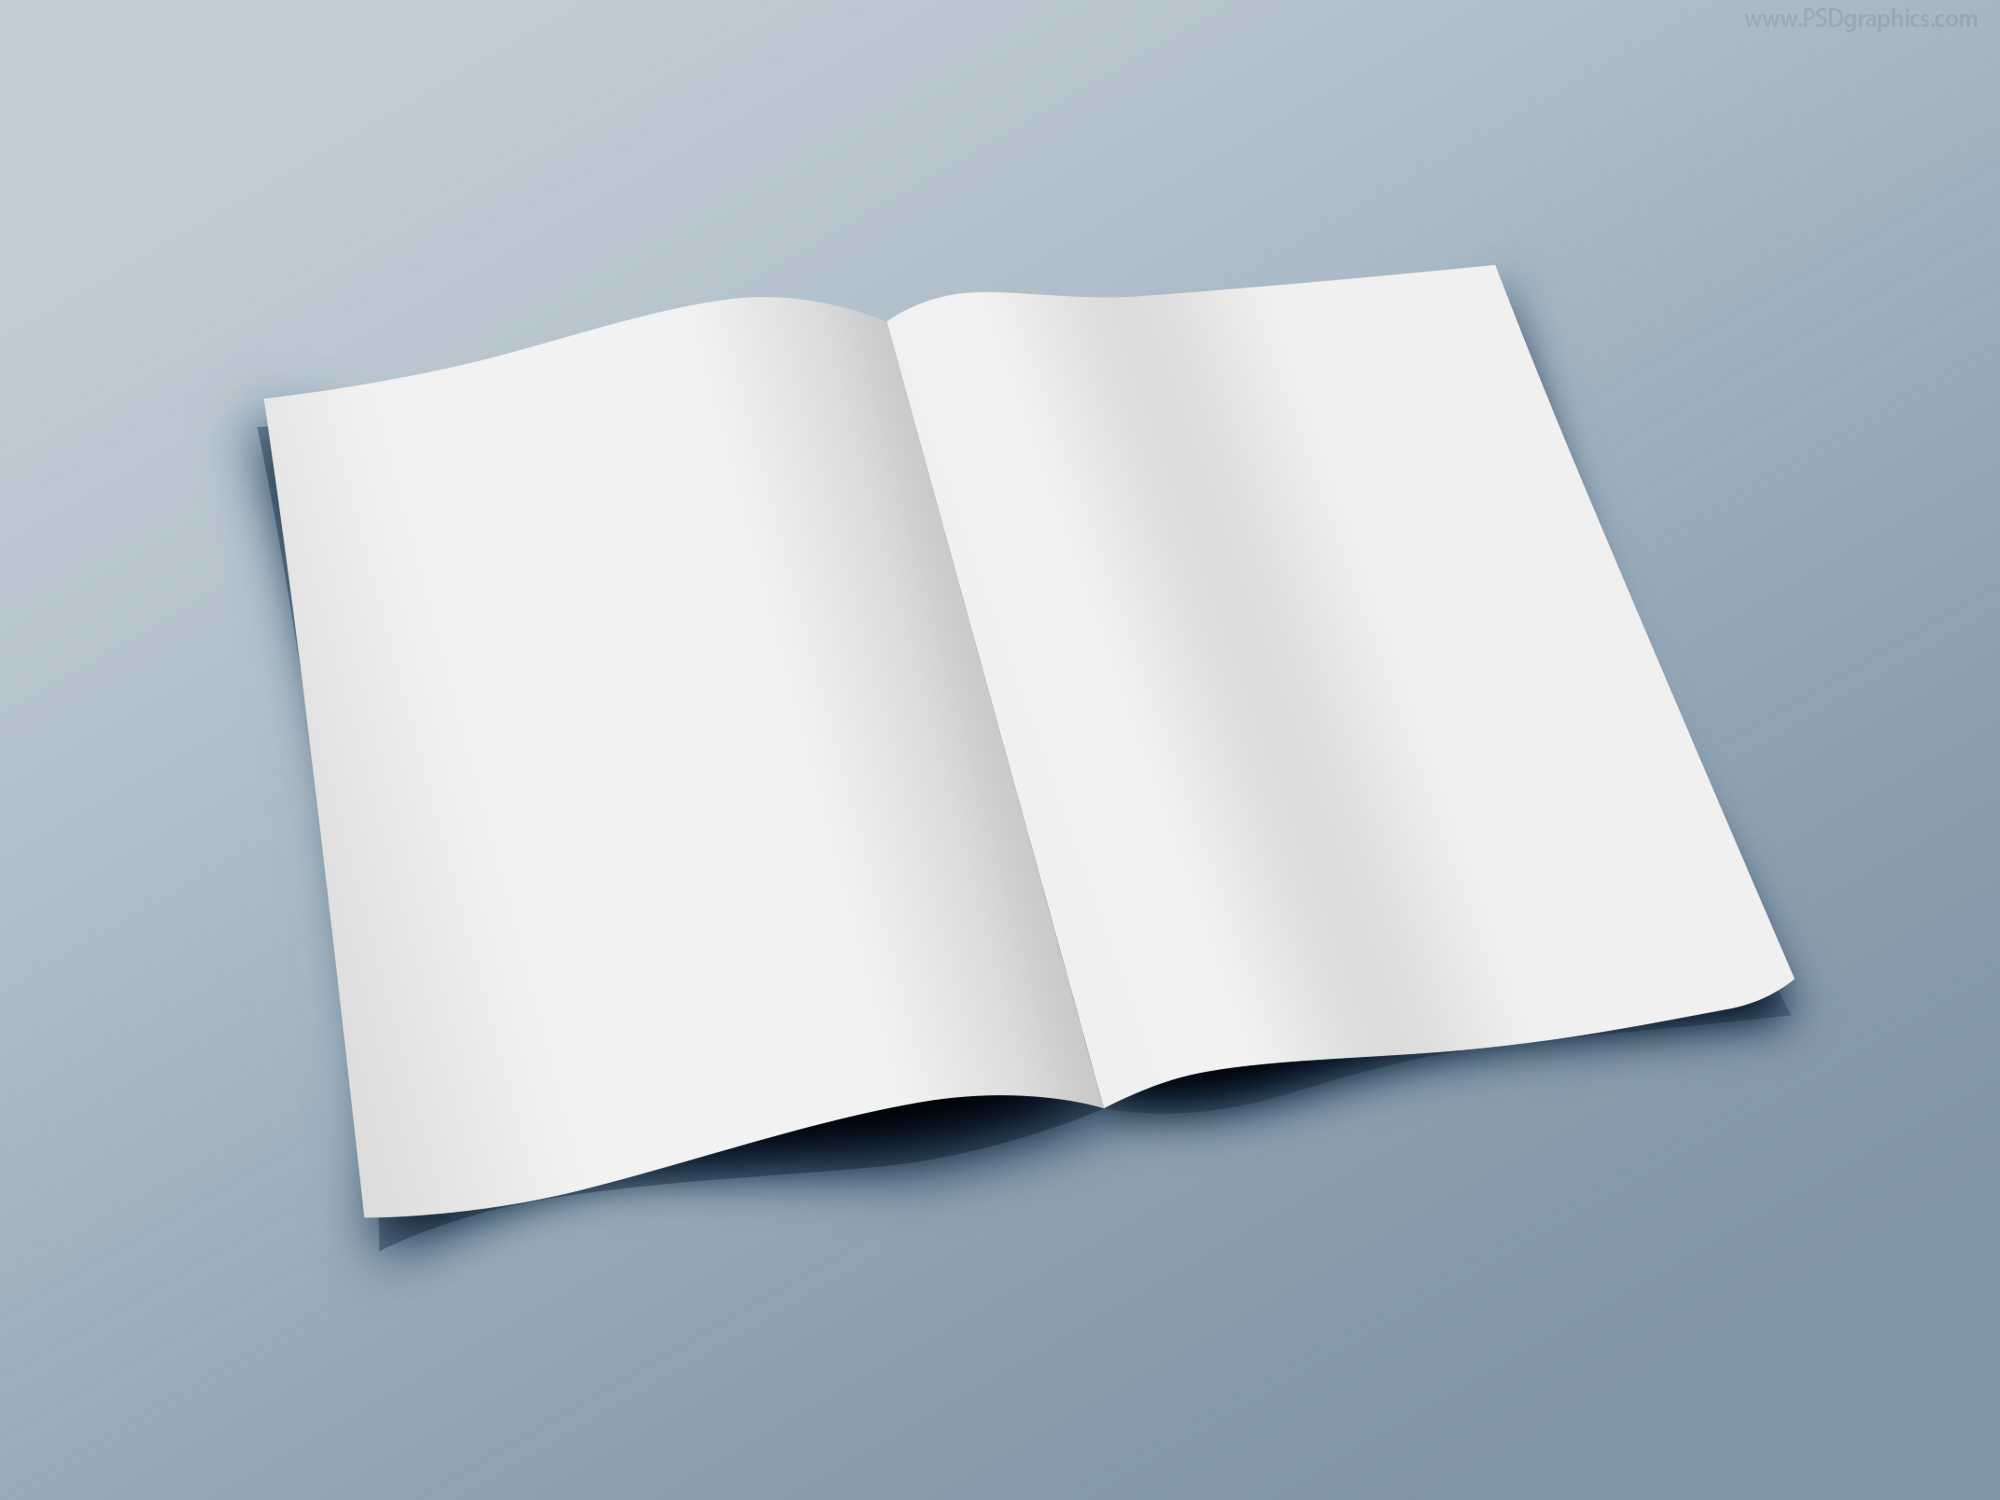 13D Open Blank Book Psd Template | Wiring Library Inside Blank Magazine Template Psd